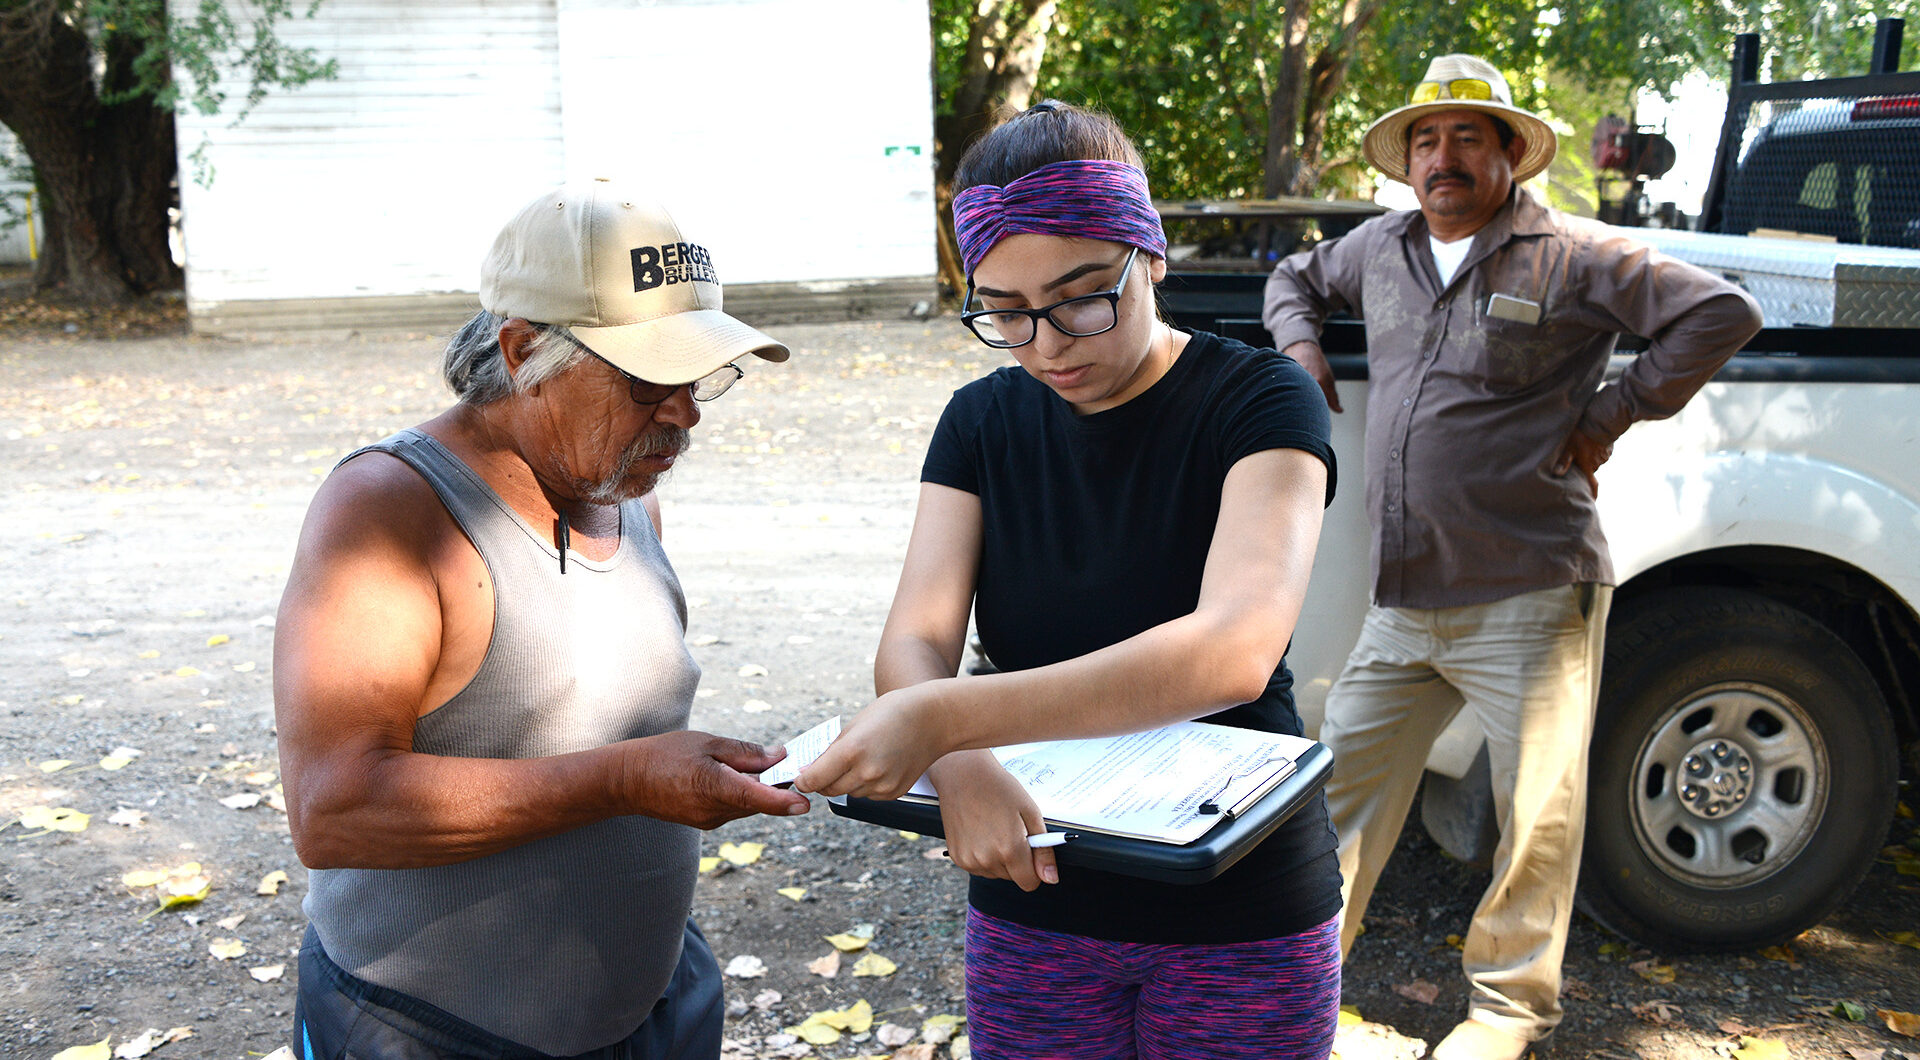 NSWA volunteer signs a new member on farm labor camp visit